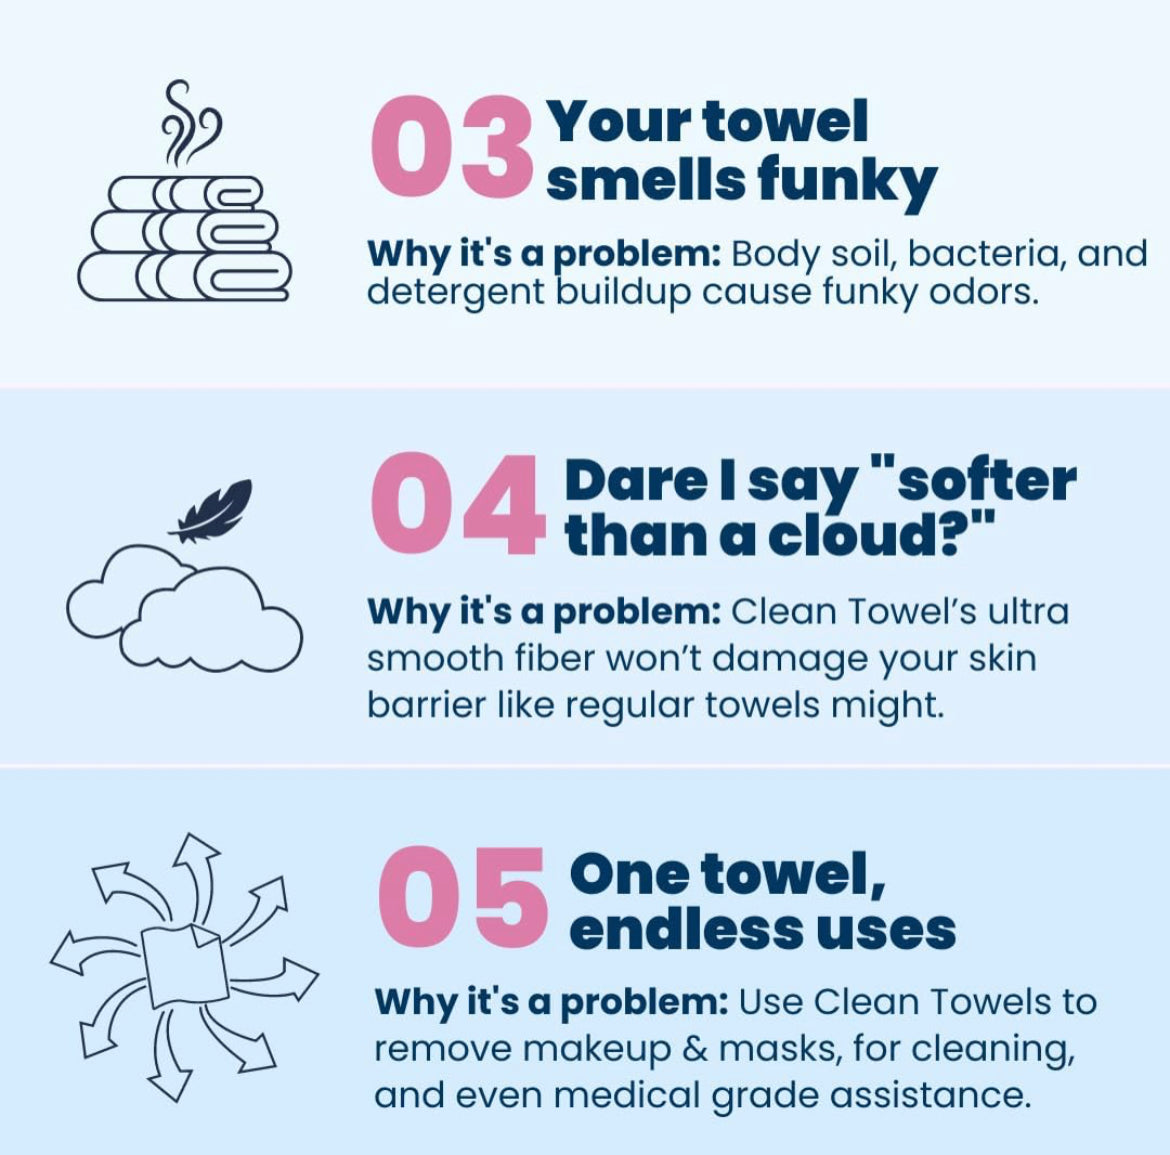 Clean Skin Club Clean Towels XL. 50 Count